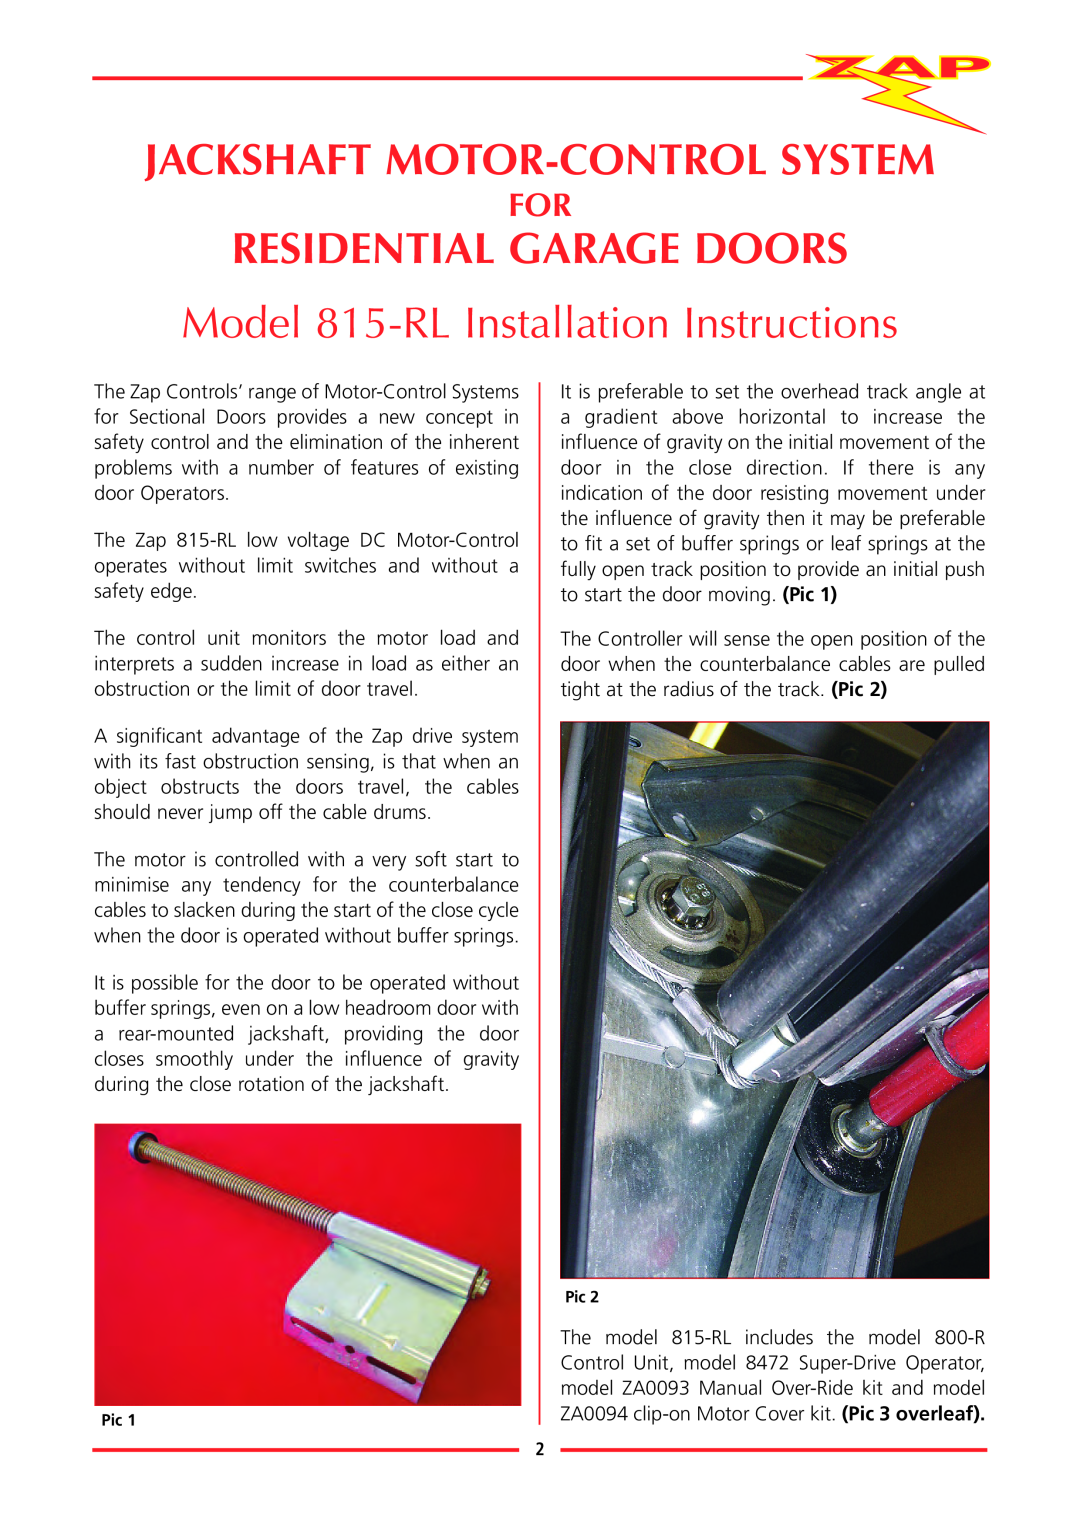 Zap Jackshaft Motor-Controlsystem, Residential Garage Doors, Model 815-RLInstallation Instructions 